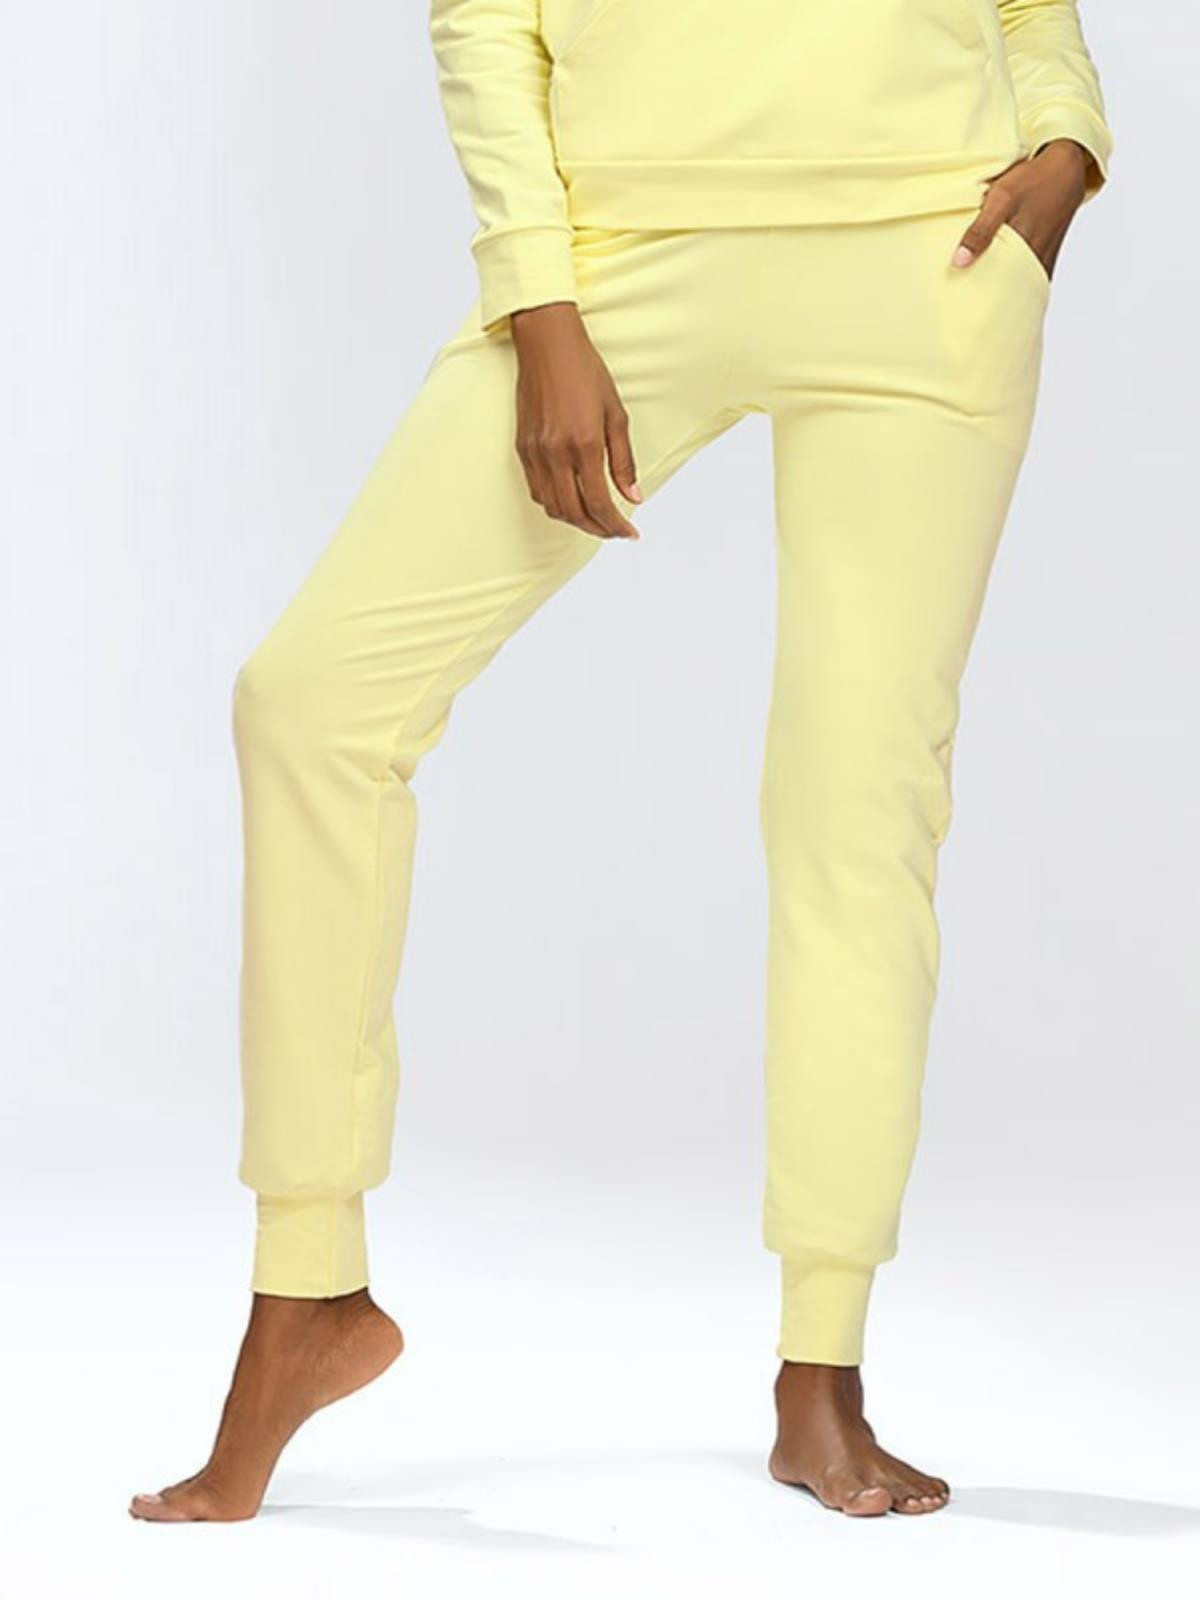 Kalhoty DKaren Seattle Yellow XL